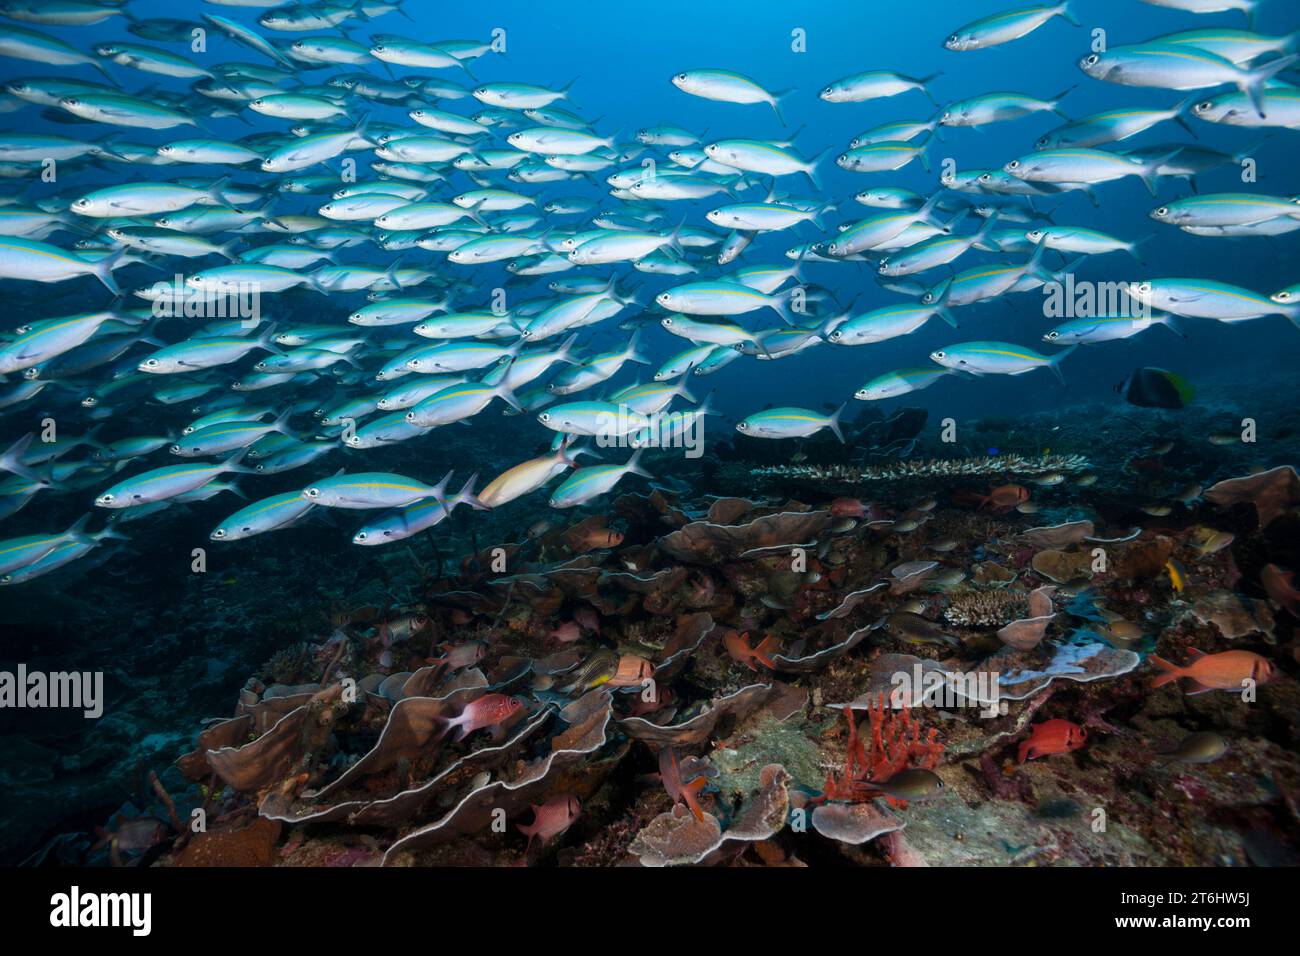 Fusiliers over Coral reef, Pterocaesio tesselata, Raja Ampat, West Papua, Indonesia Stock Photo